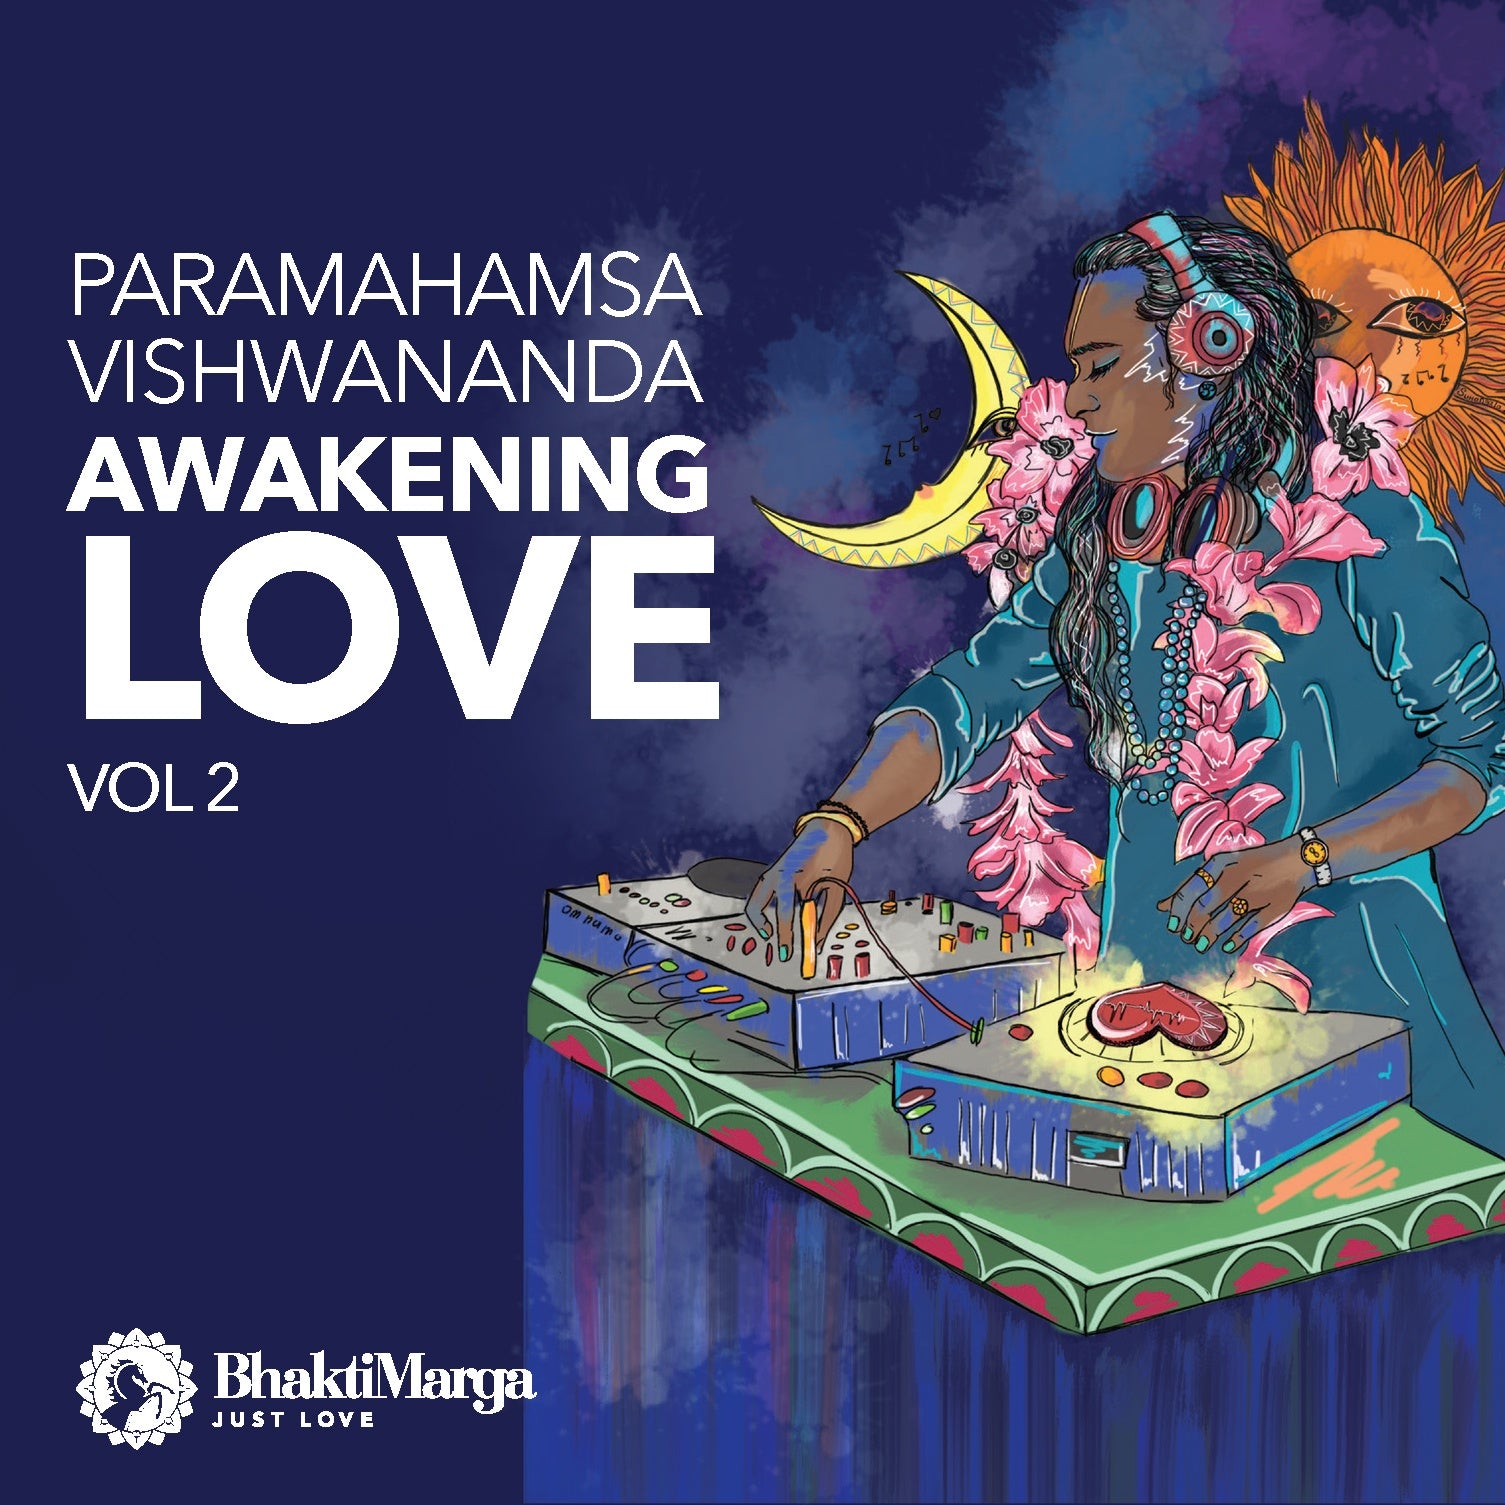 Awakening Love Vol.2 - Paramahamsa Vishwananda